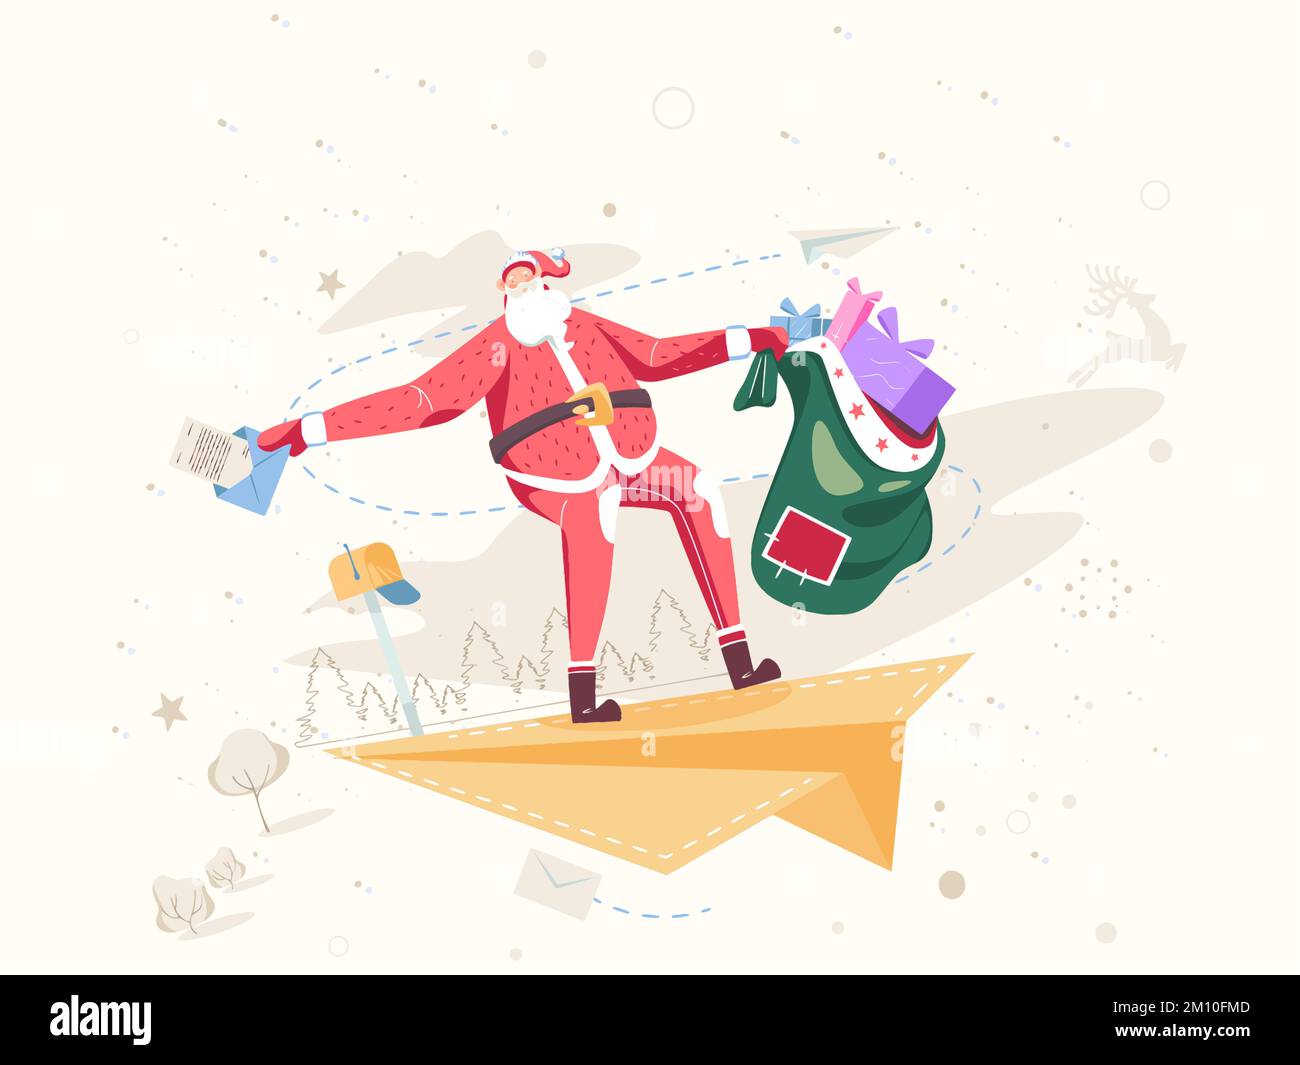 Funny Santa Claus Merry Christmas tree Happy New Year Celebration Gift Christmas Postcard Christmas Website illustration Stock Photo